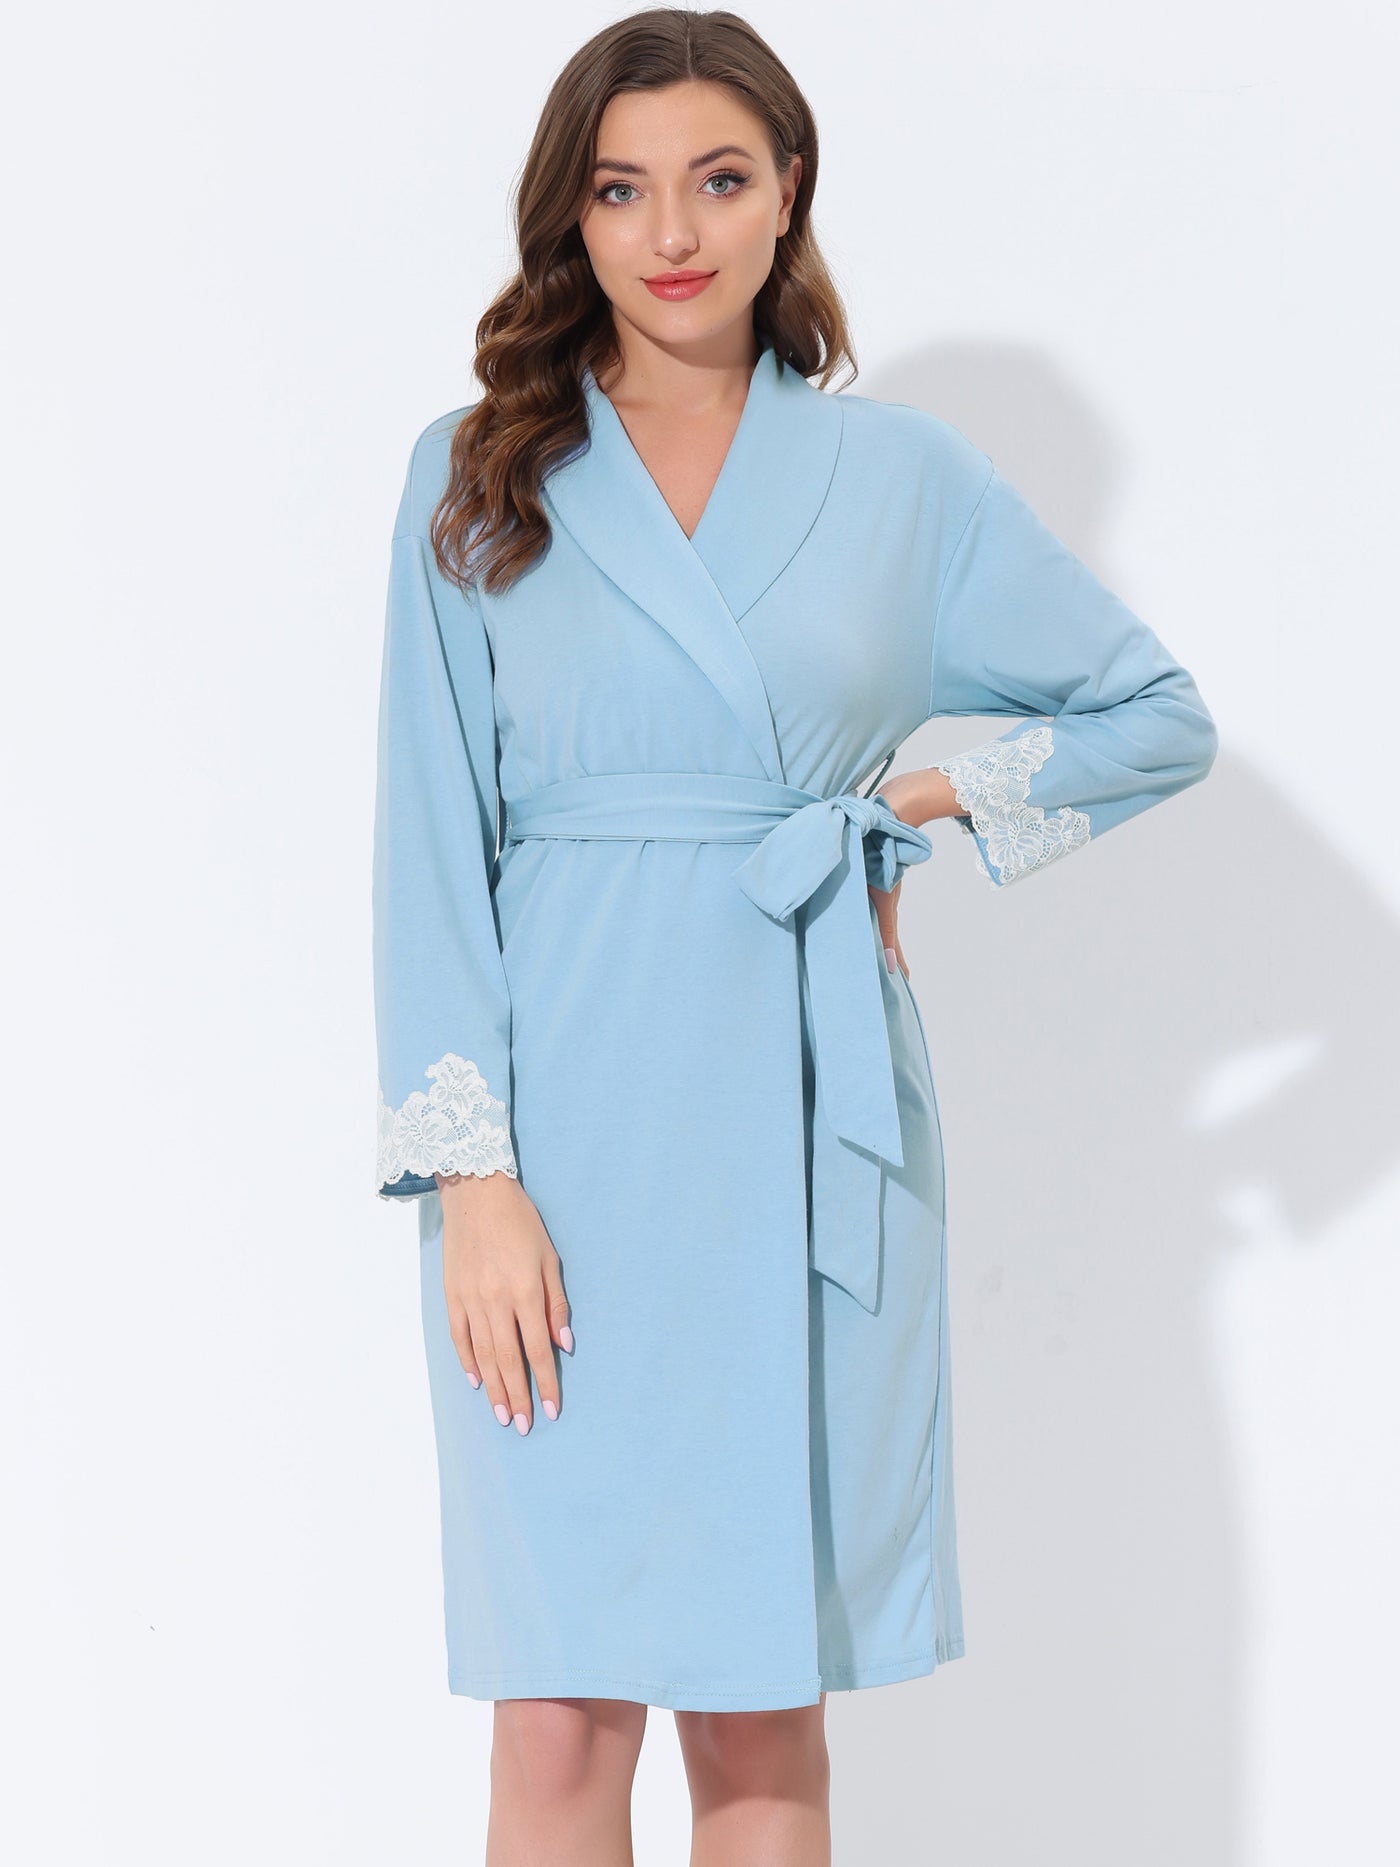 Bublédon Women's Robe Sleepwear Lace Nightgown Tie Waist Lounge Bathrobe